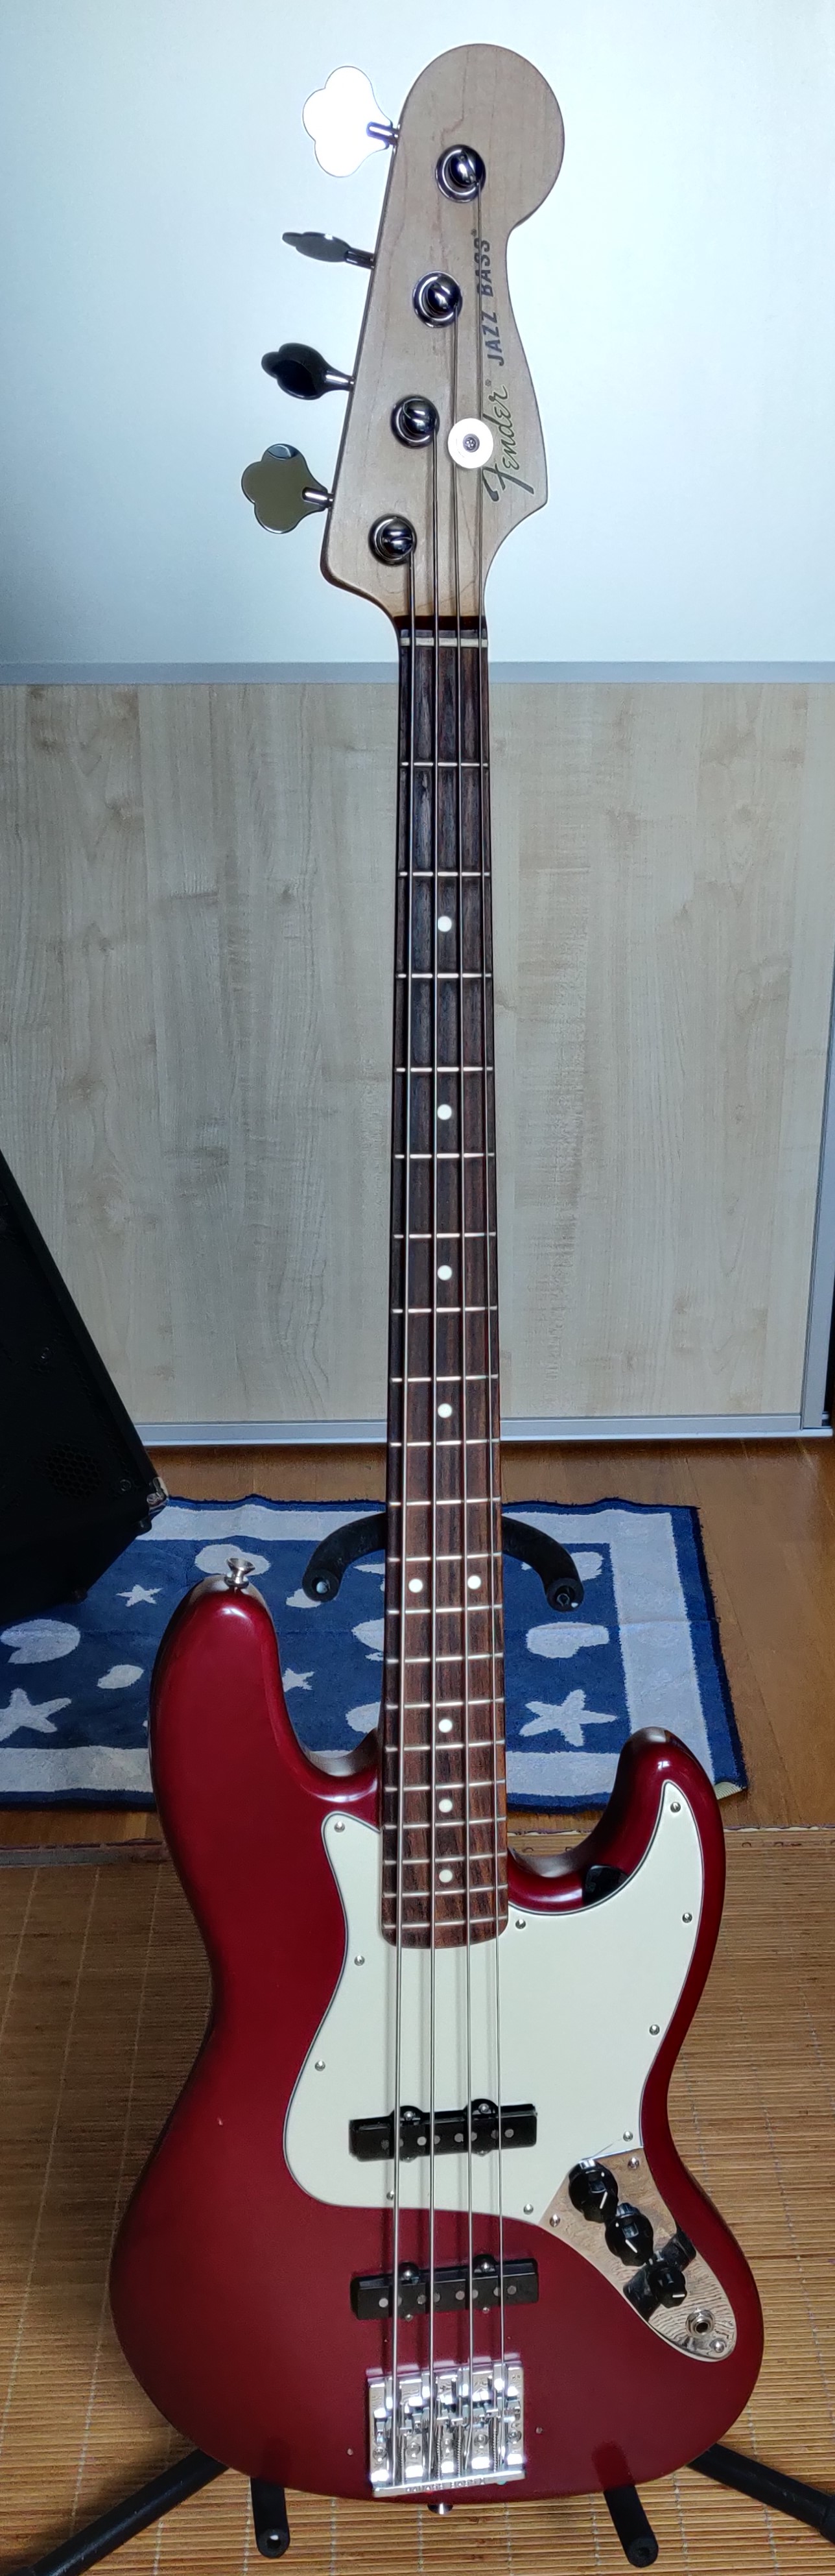 Fender USA Highway One Jazz Bass ジャズベース - ベース